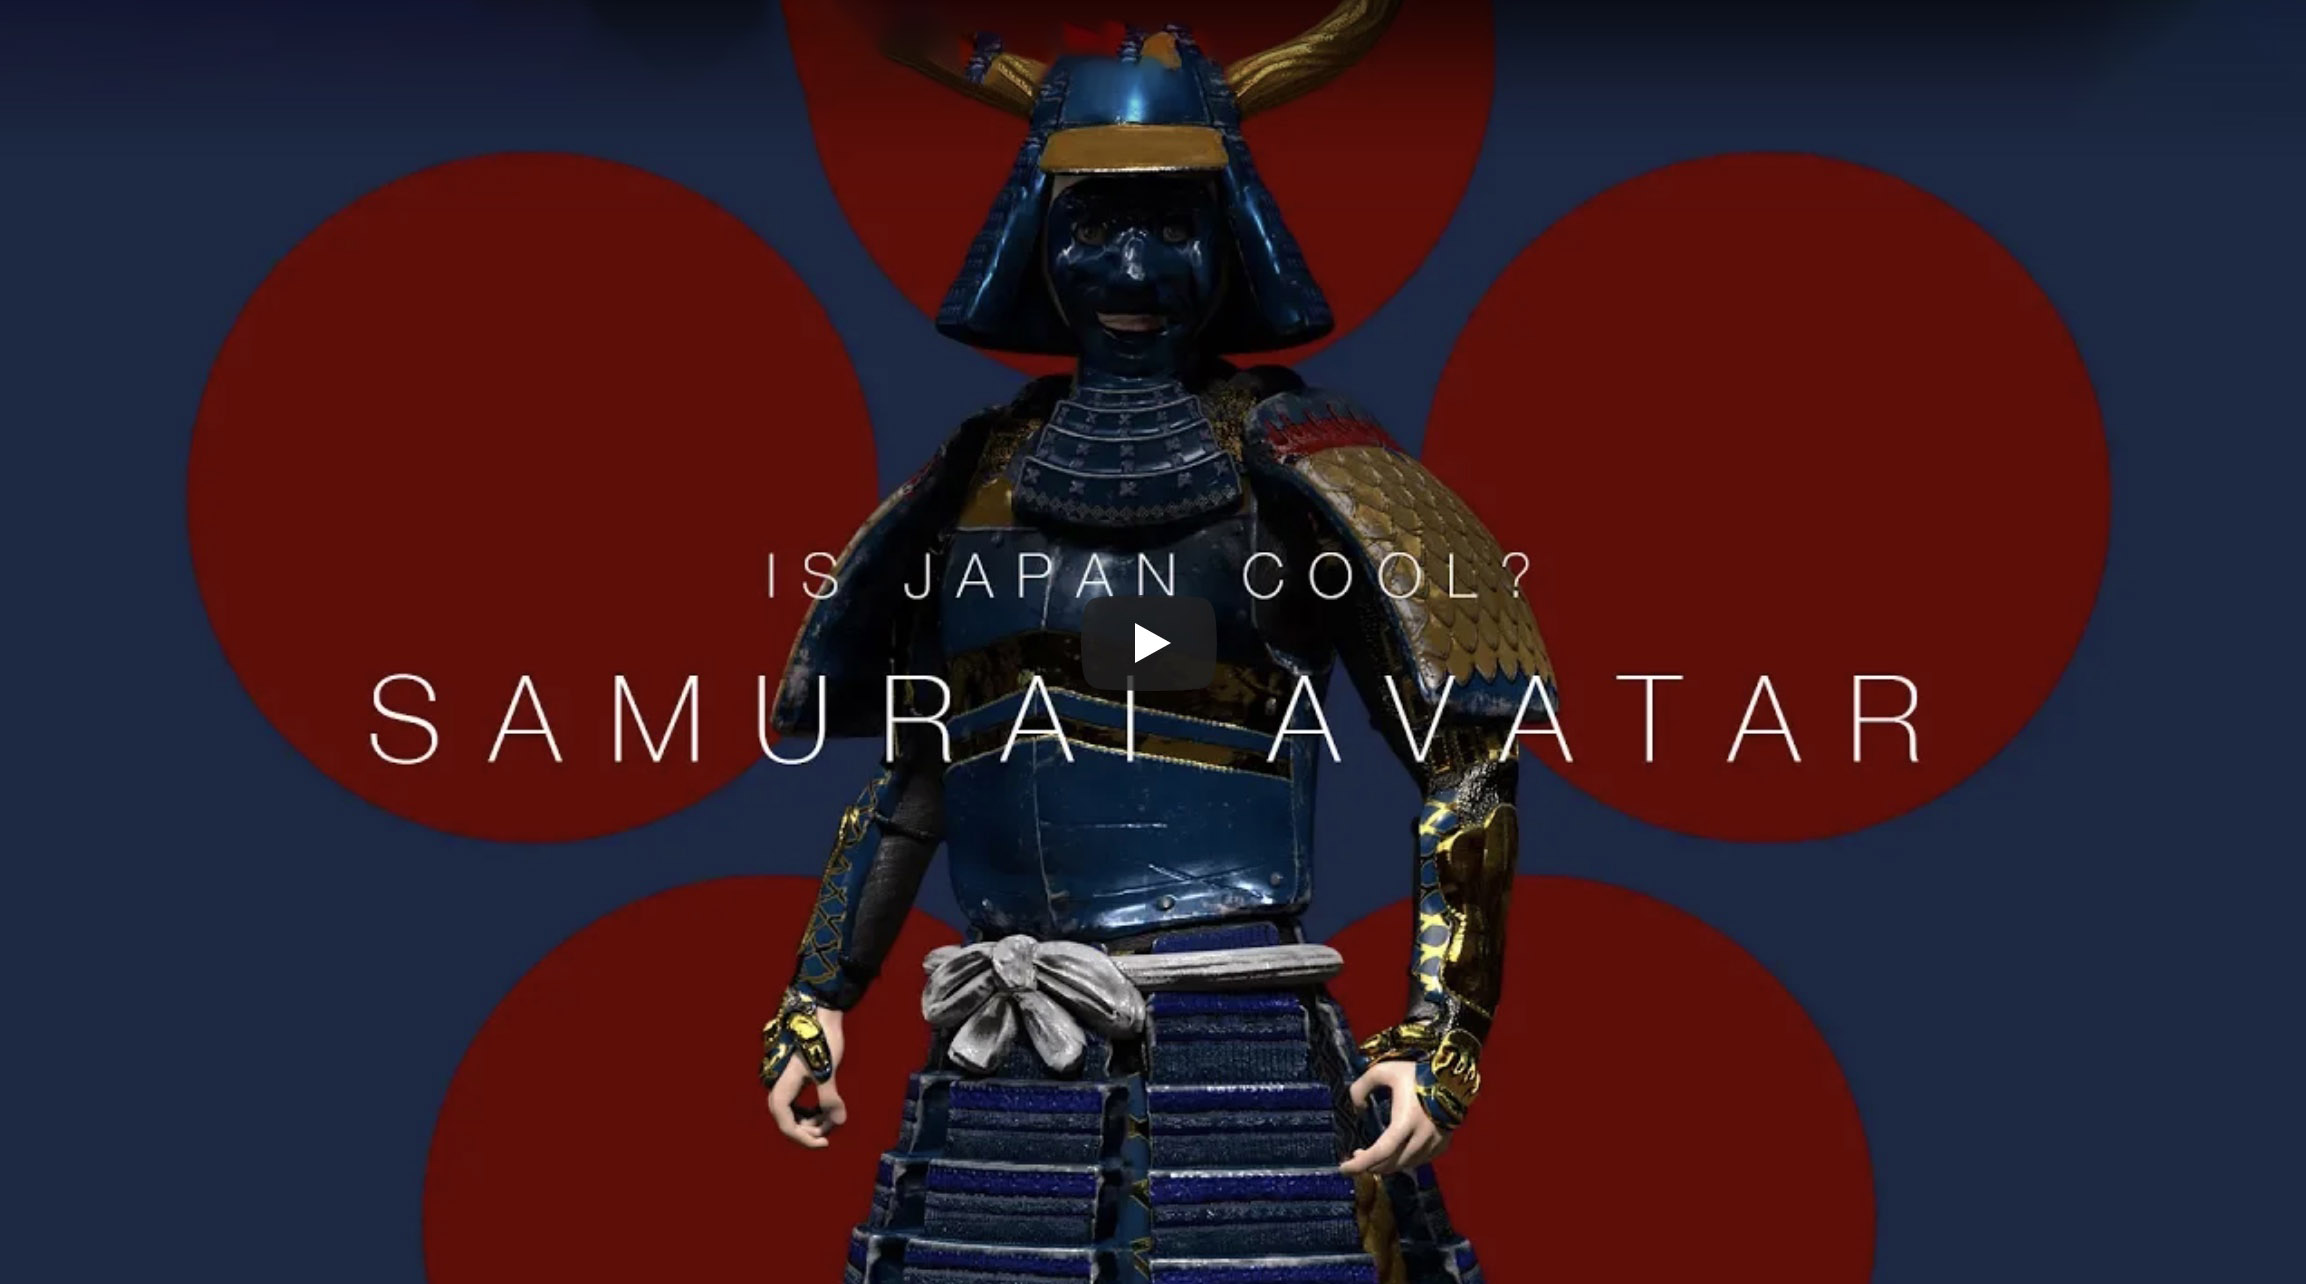 ANA Japan Airlines Let you Create your Custom Samurai Avatar